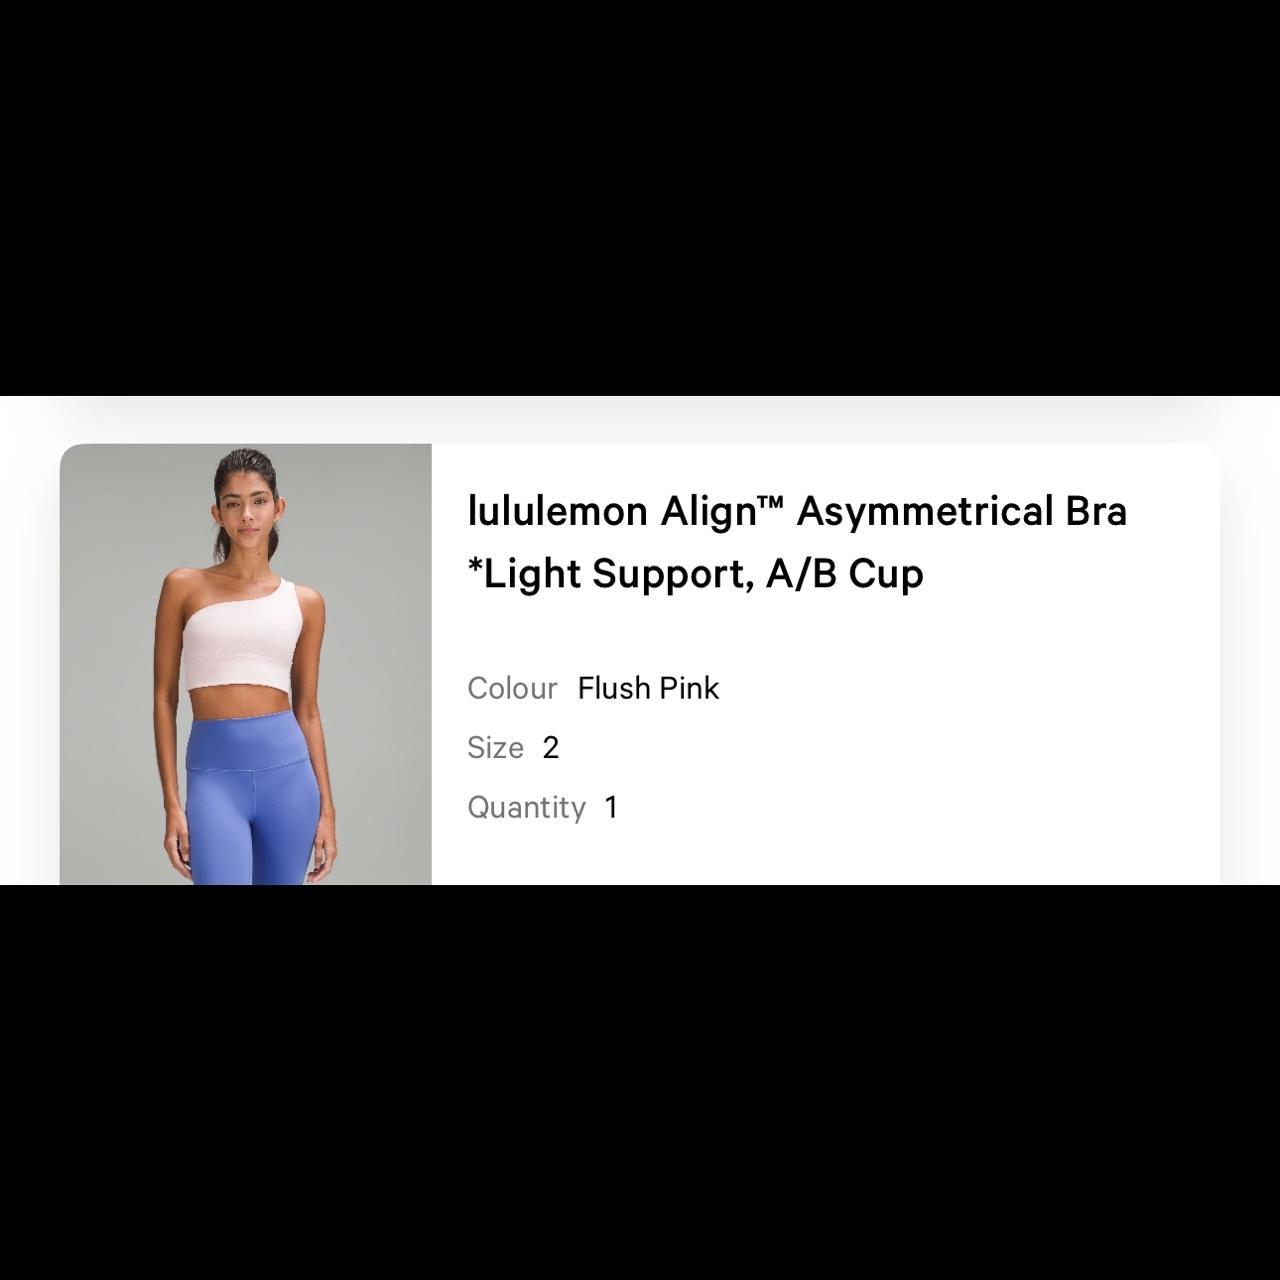 lululemon Align Asymmetrical Bra Light Support, A/B Cup